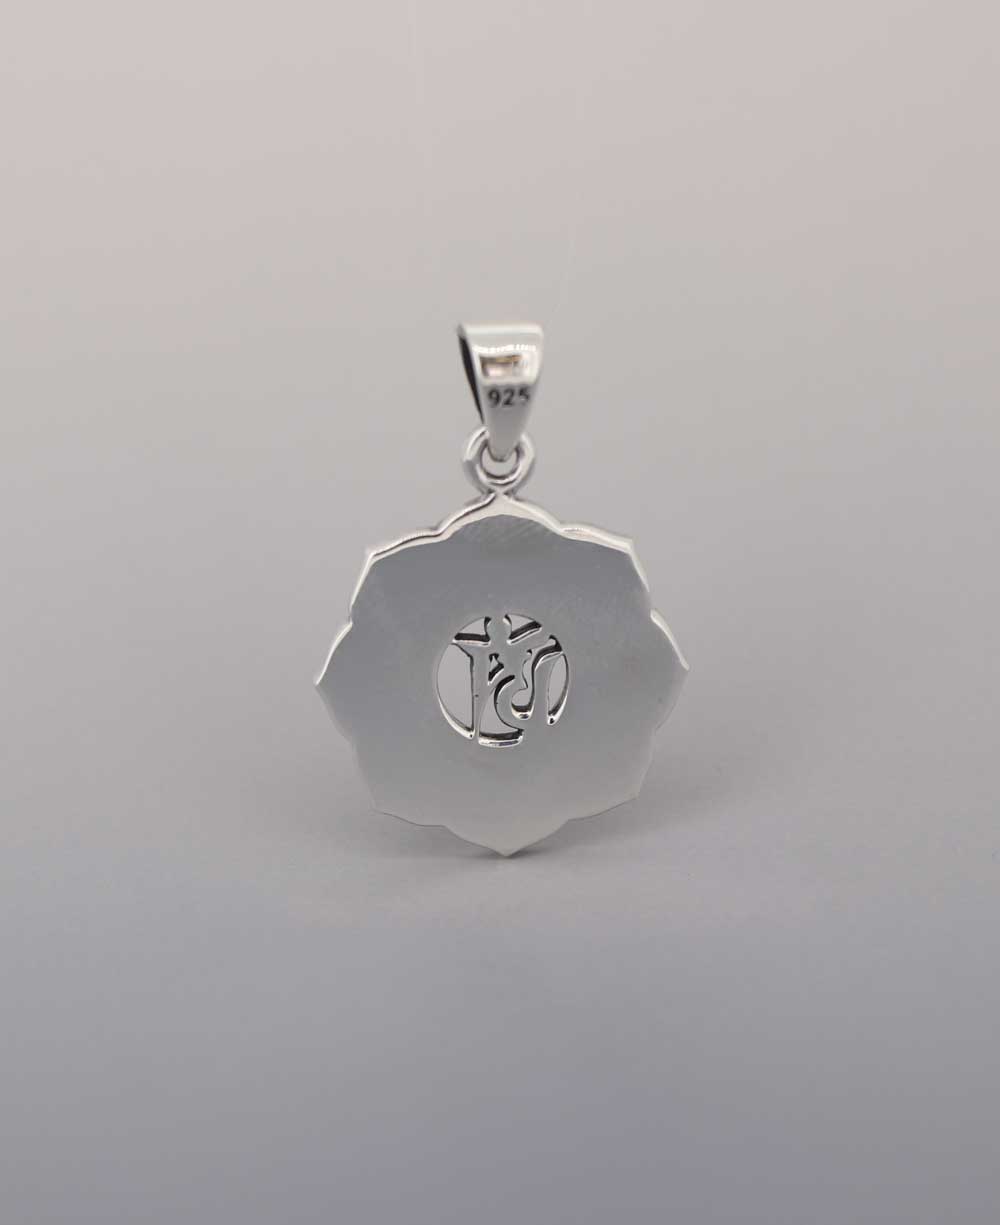 Sterling Silver Tibetan Om Pendant with Auspicious Symbols - Charms & Pendants